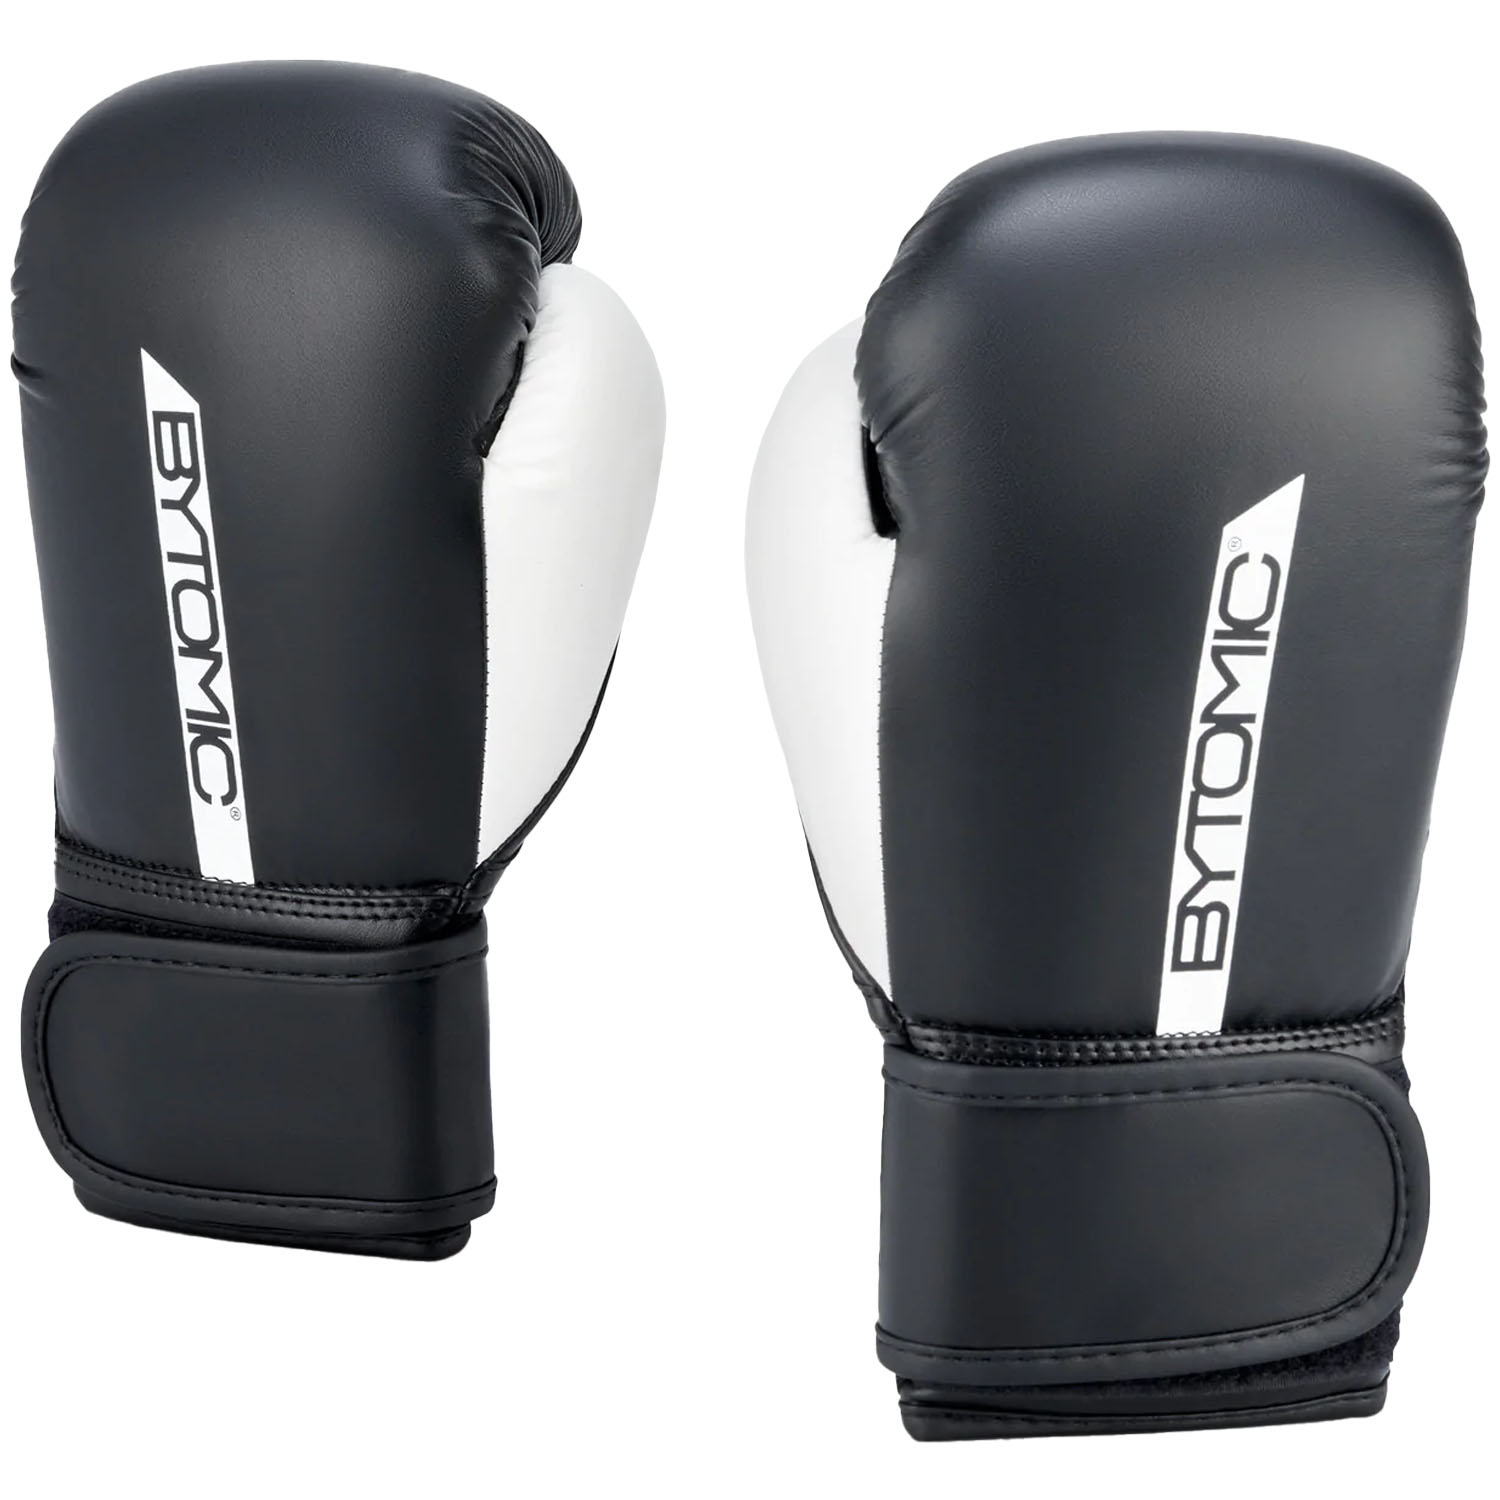 Bytomic Boxing Gloves, red Label, black-white